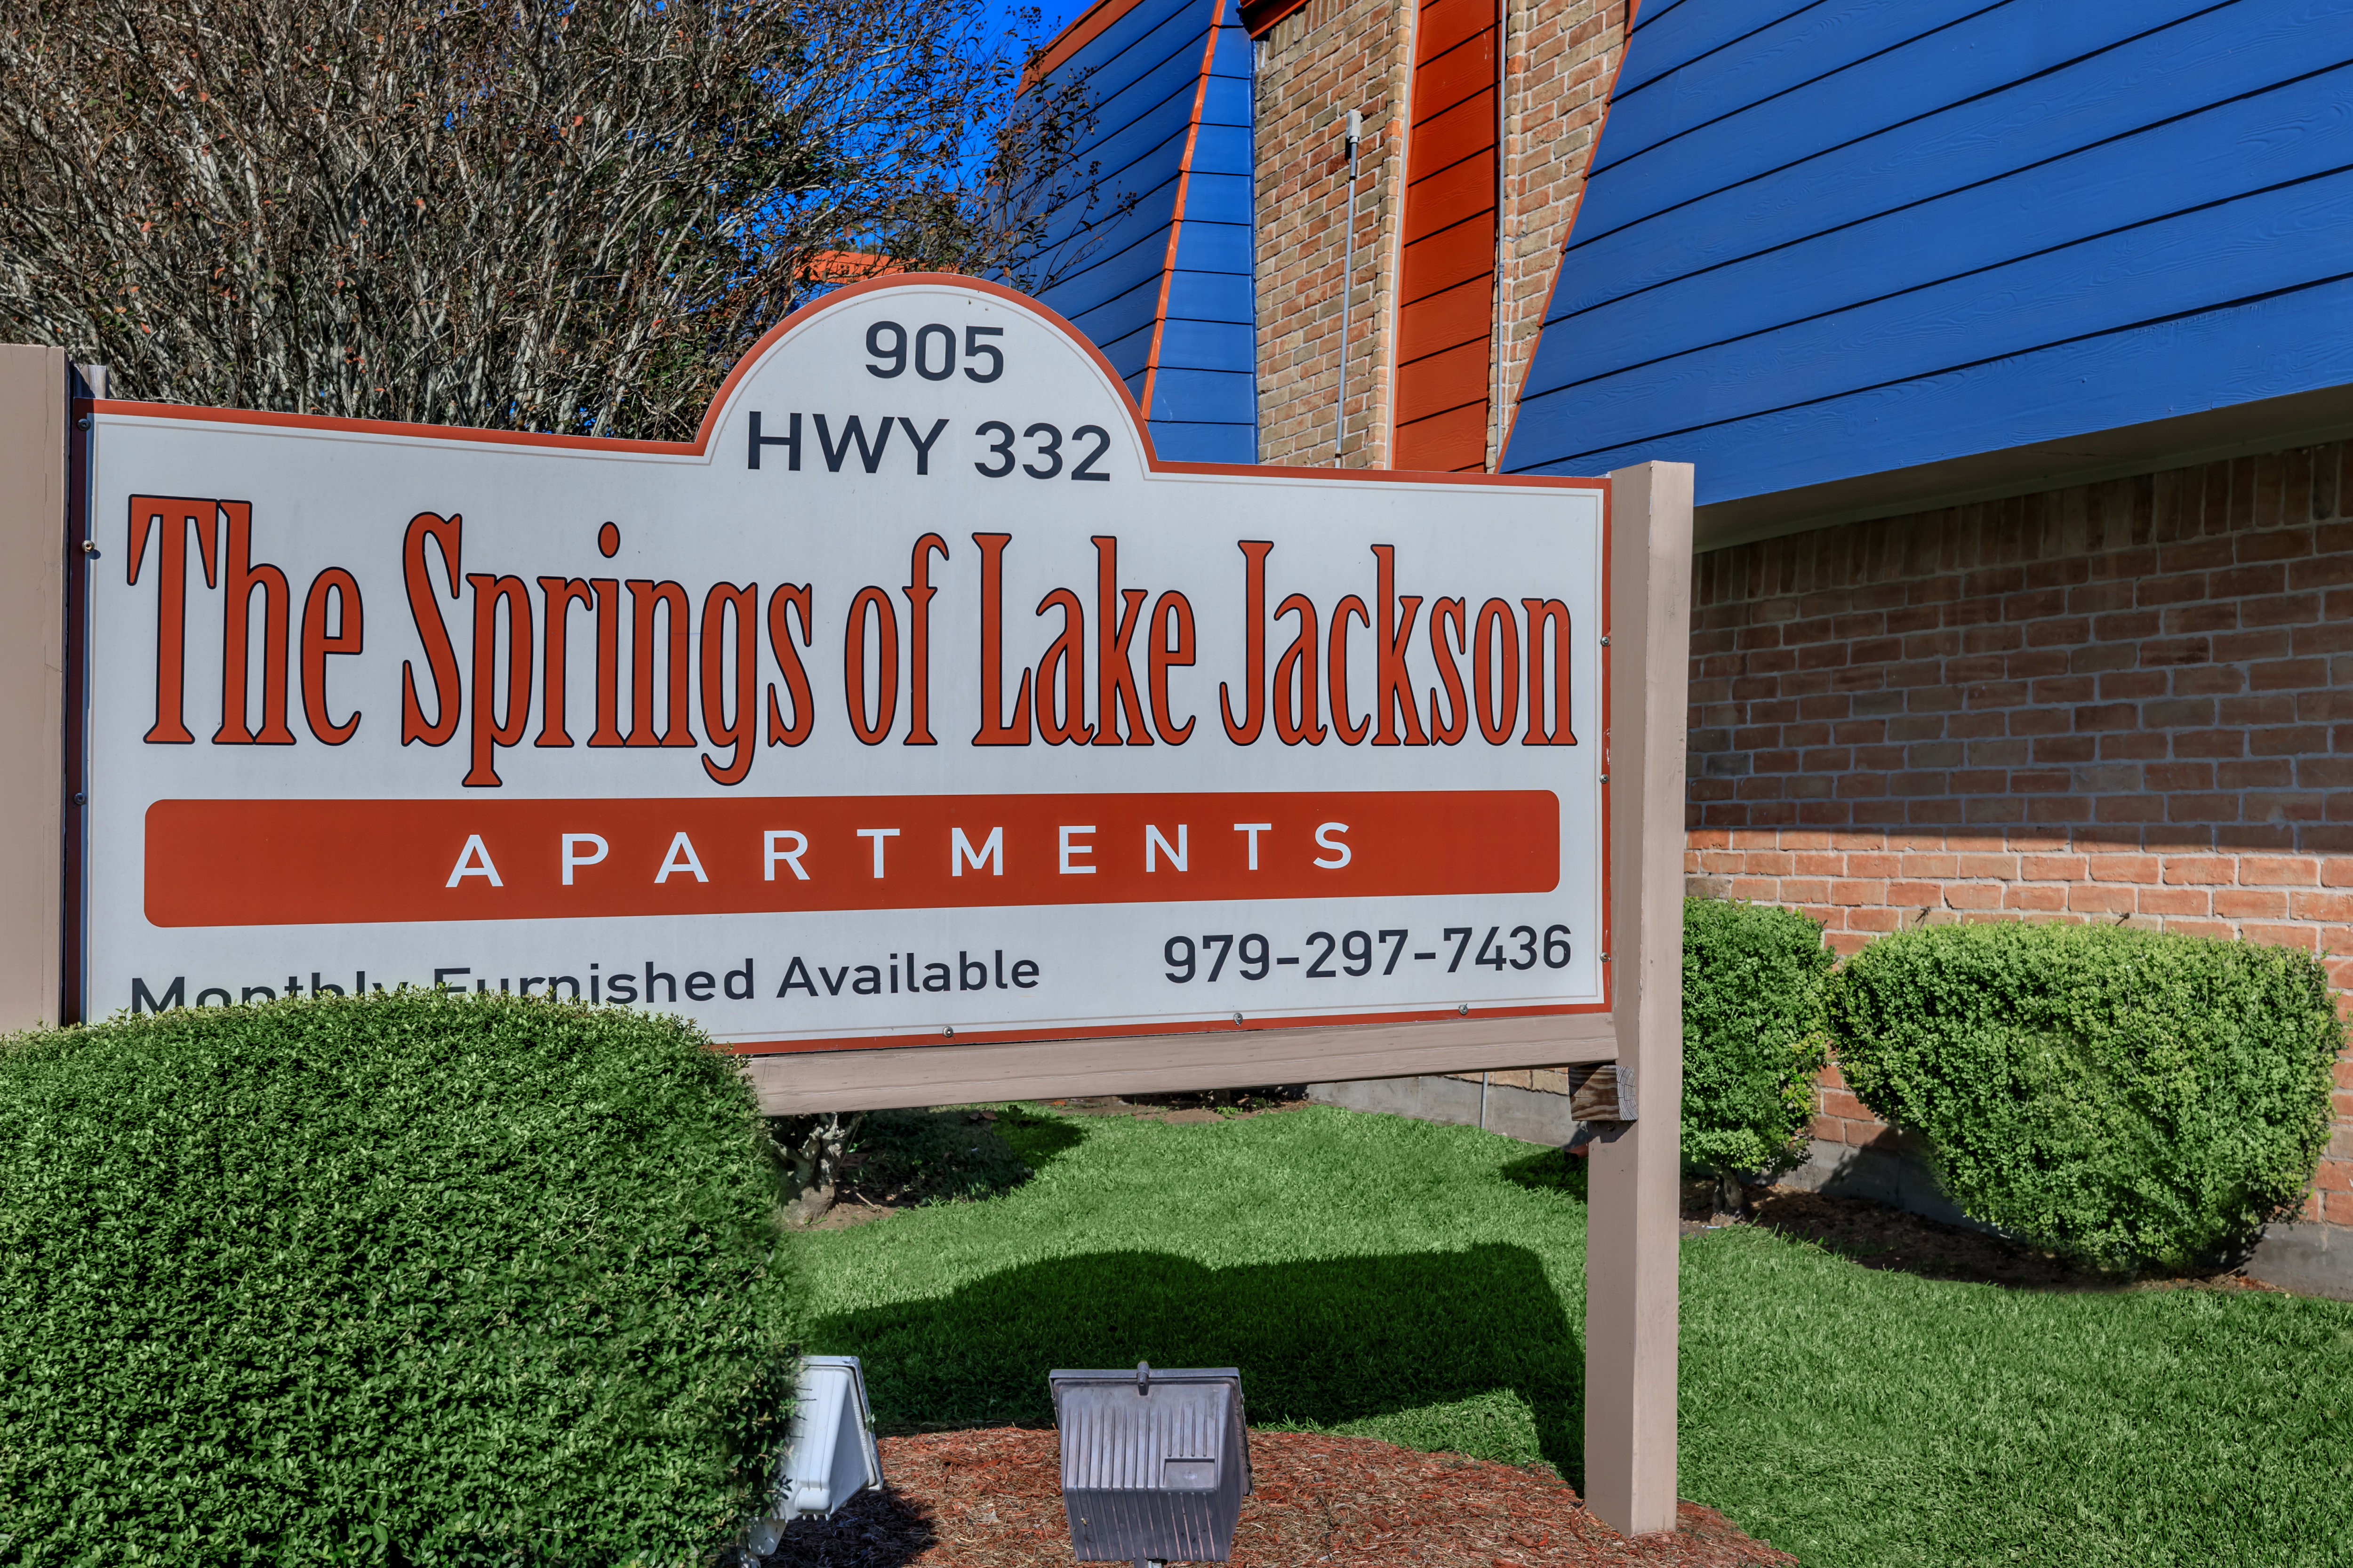 The Springs of Lake Jackson.jpg